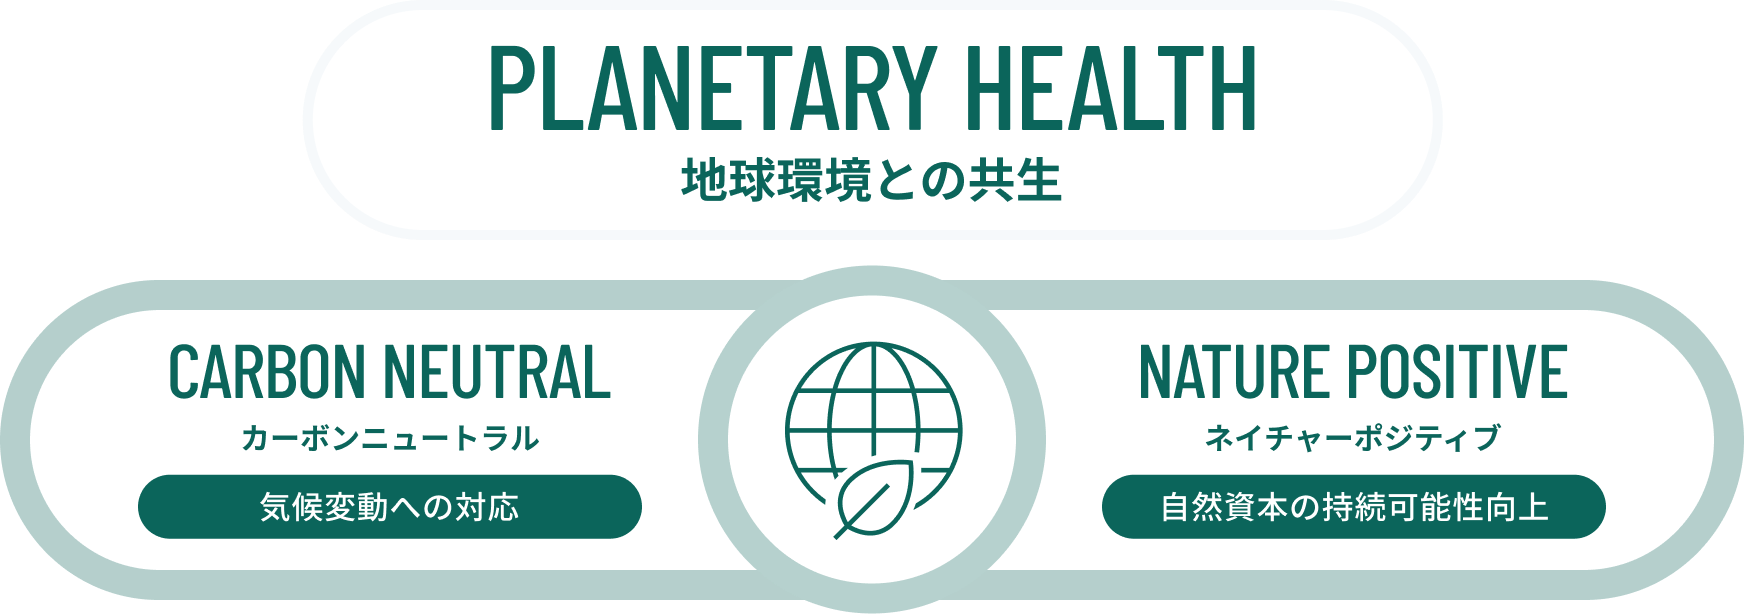 PLANETARY HEALTH 地球環境との共生